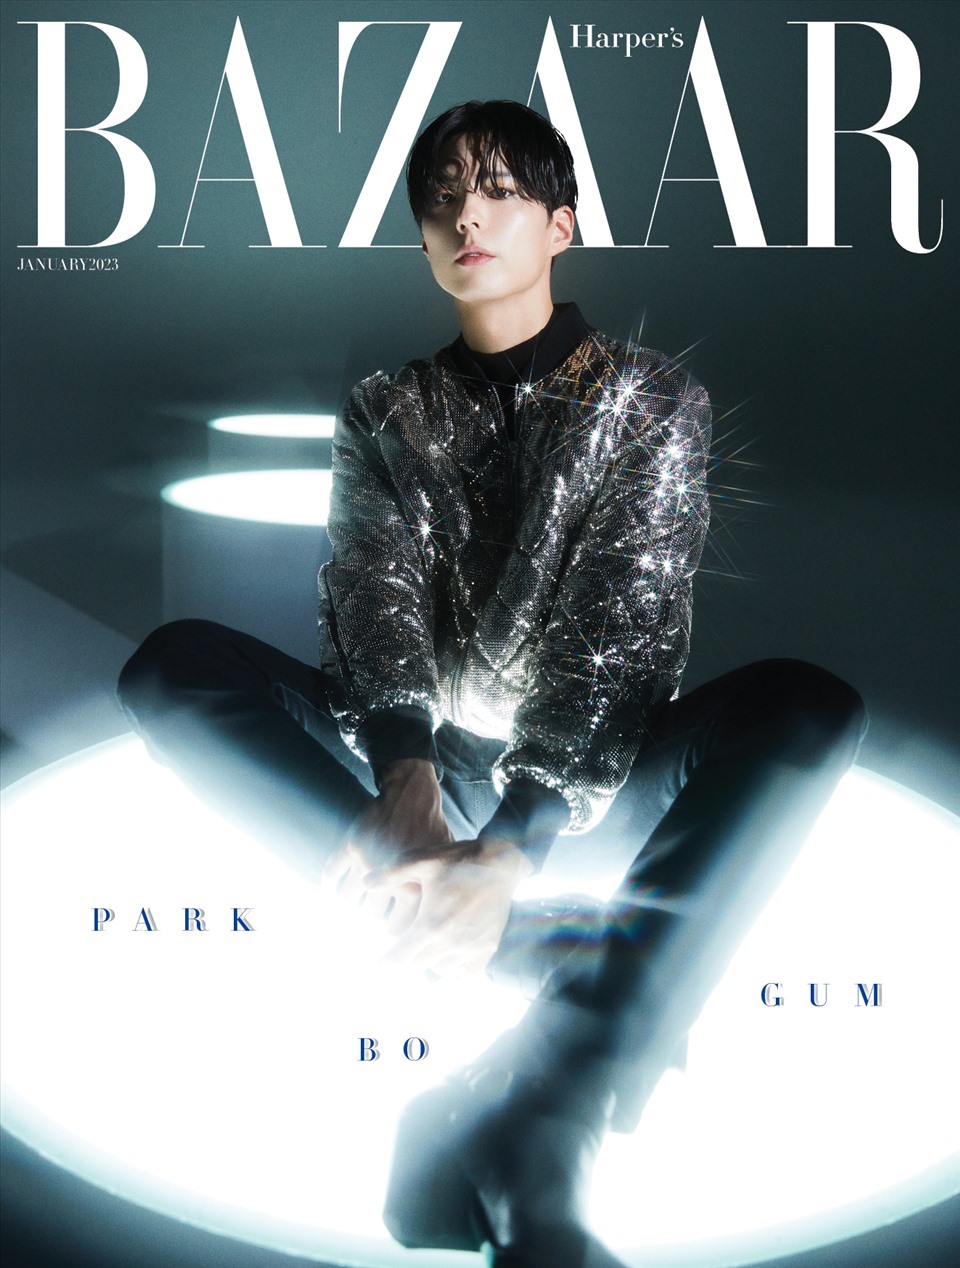 Park Bo Gum lên trang bìa Harper's Bazaar số tháng 1.2023. Ảnh: Harper's Bazaar Korea.